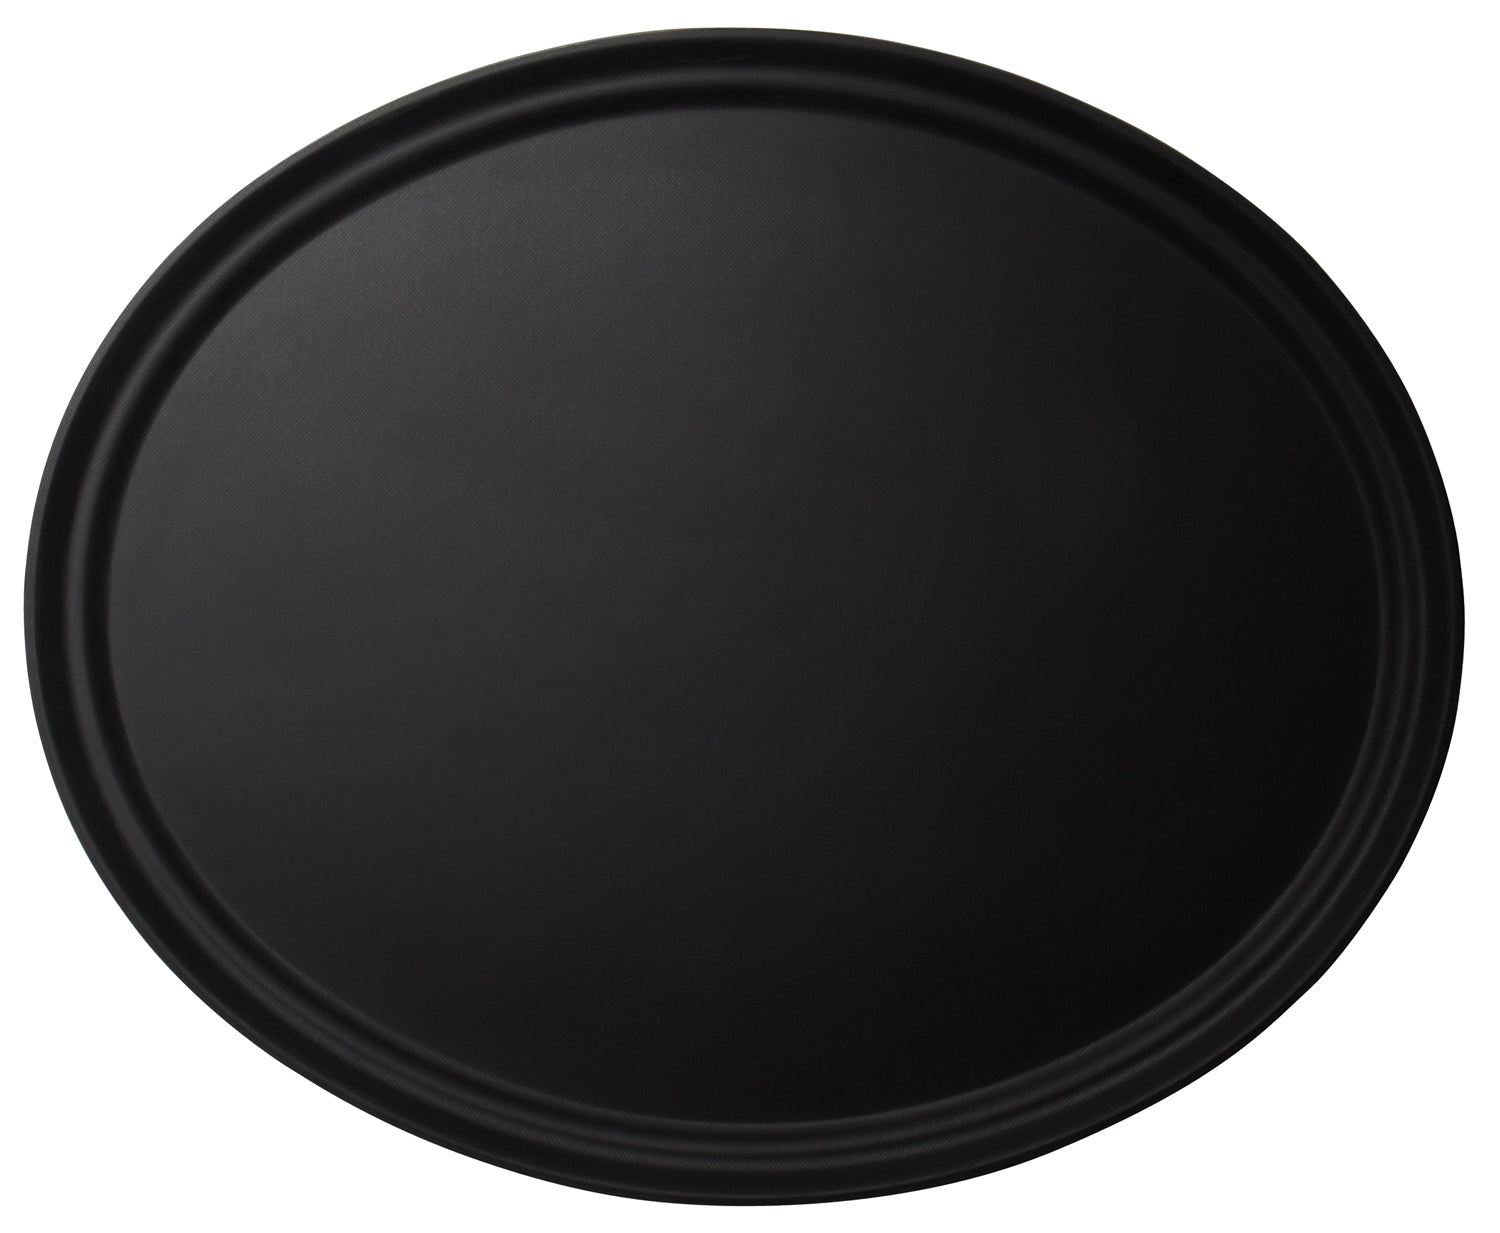 Cambro Camtread® Fiberglass Tablett mit rutschfester Gummioberfläche, oval – niedriges Profil 56 x 75 cm, 6 Stück im Karton - 2700CT110